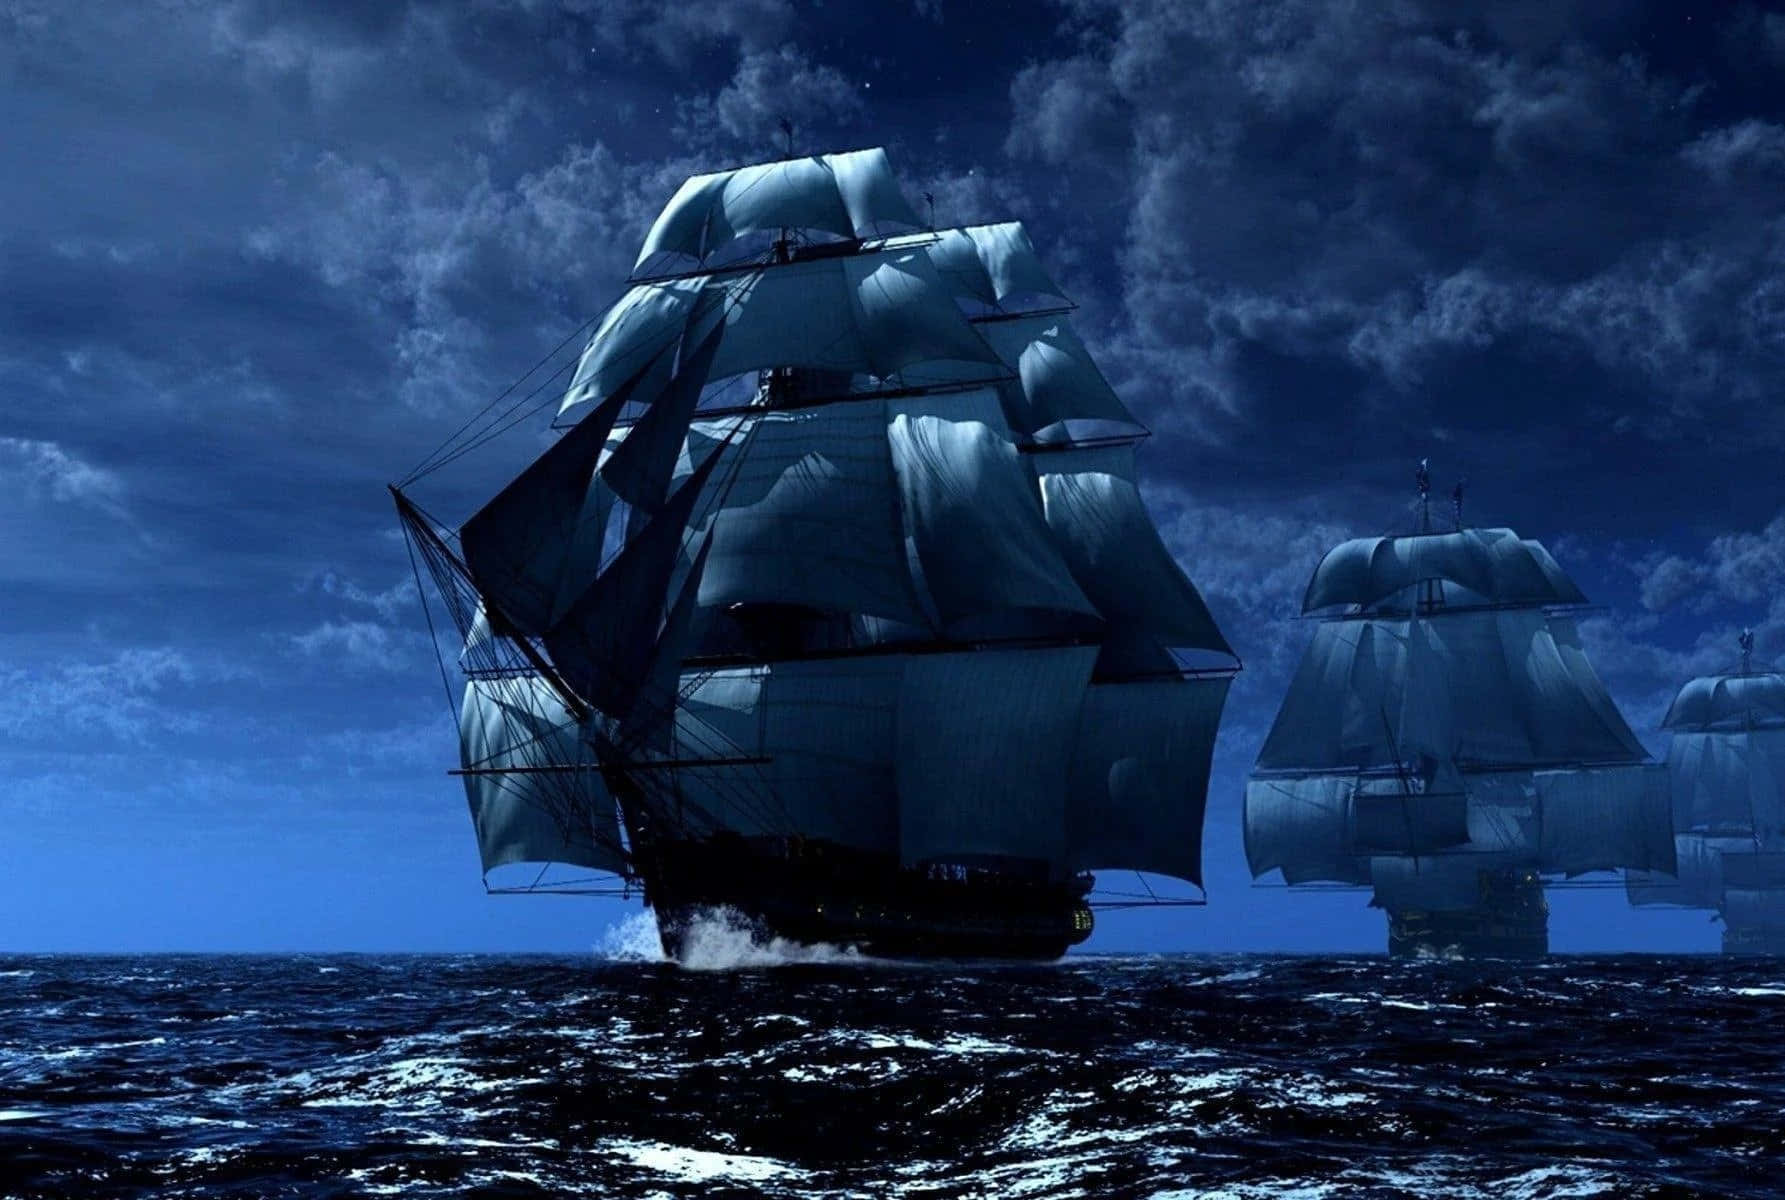 "Ahoy matey! Set sail to an adventure of a lifetime!"